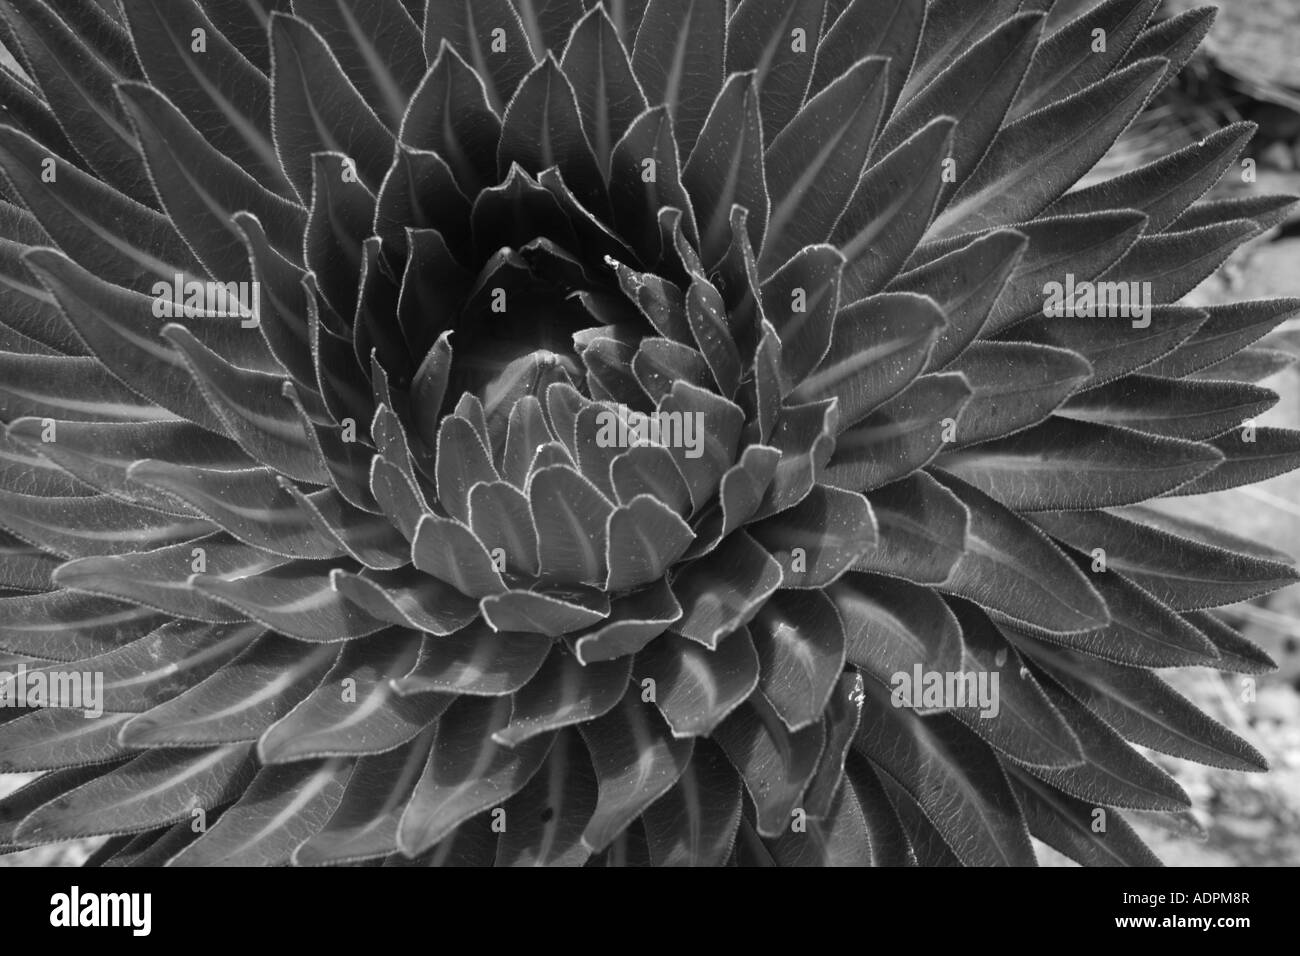 Plants lobelia Black and White Stock Photos & Images - Alamy